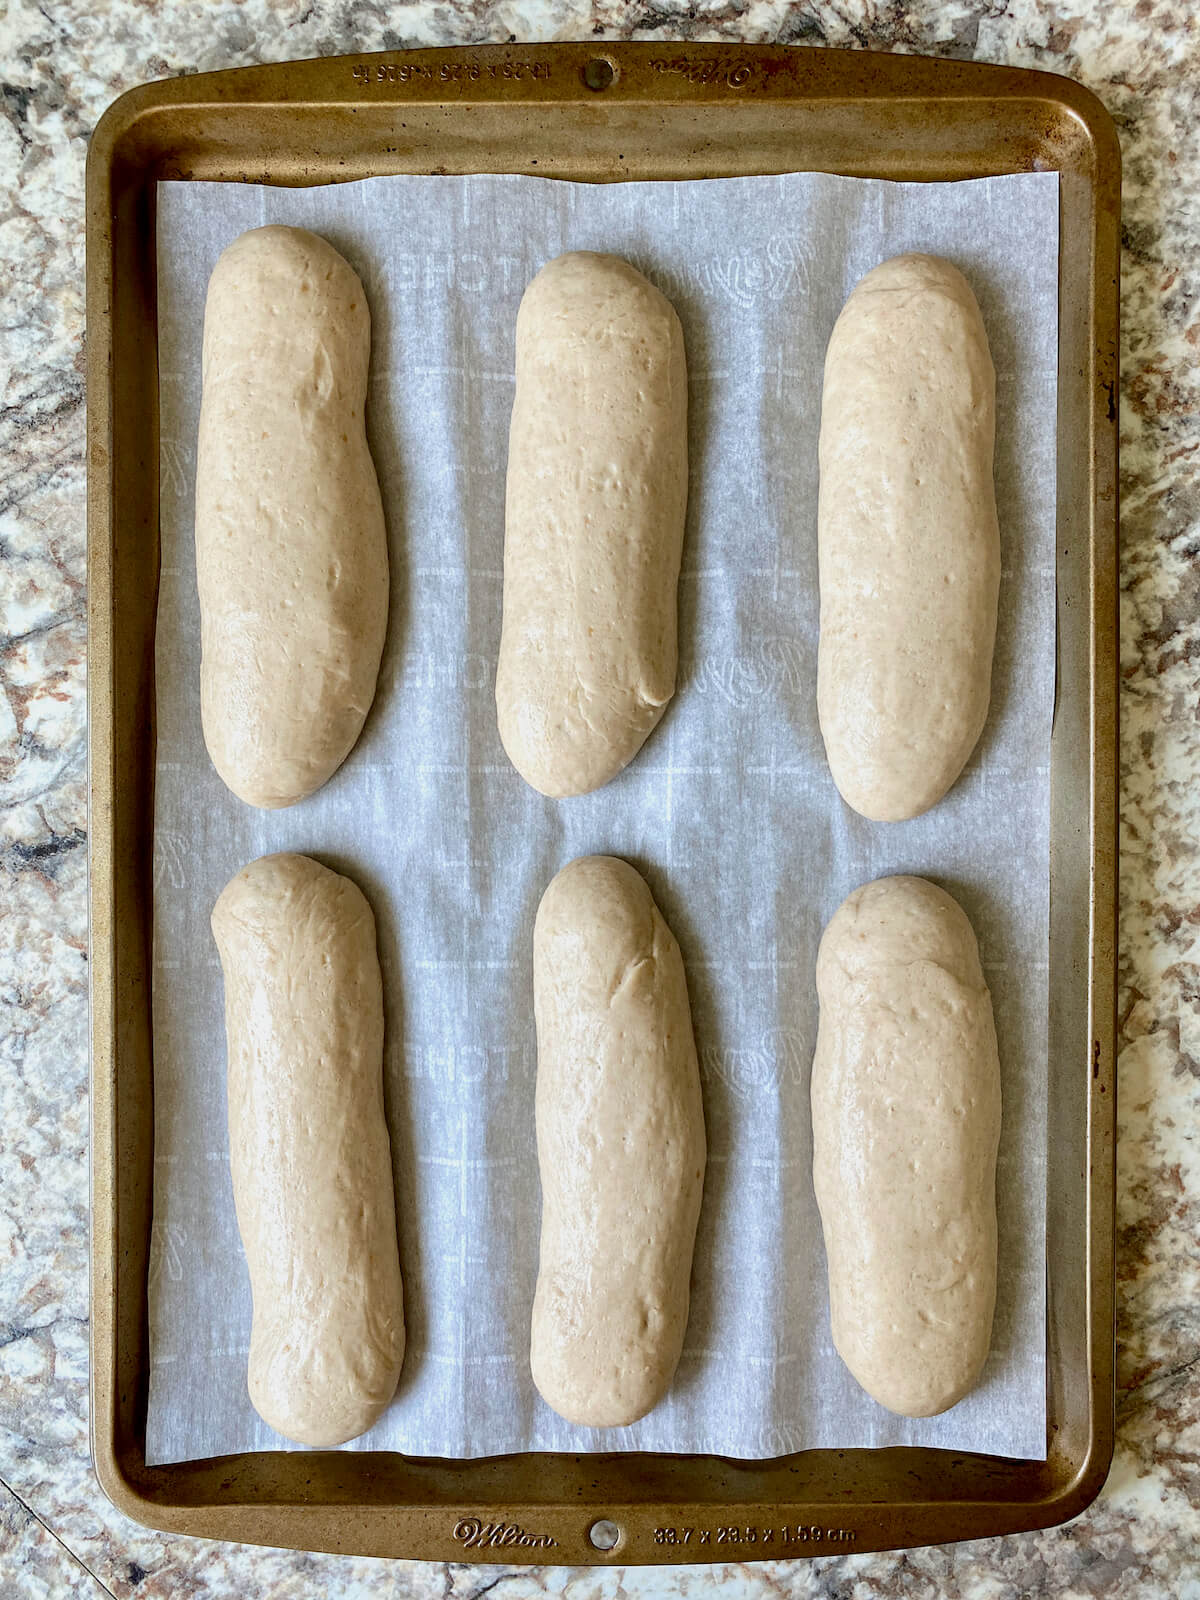 Unbaked sourdough breadsticks on a baking sheet after proofing.